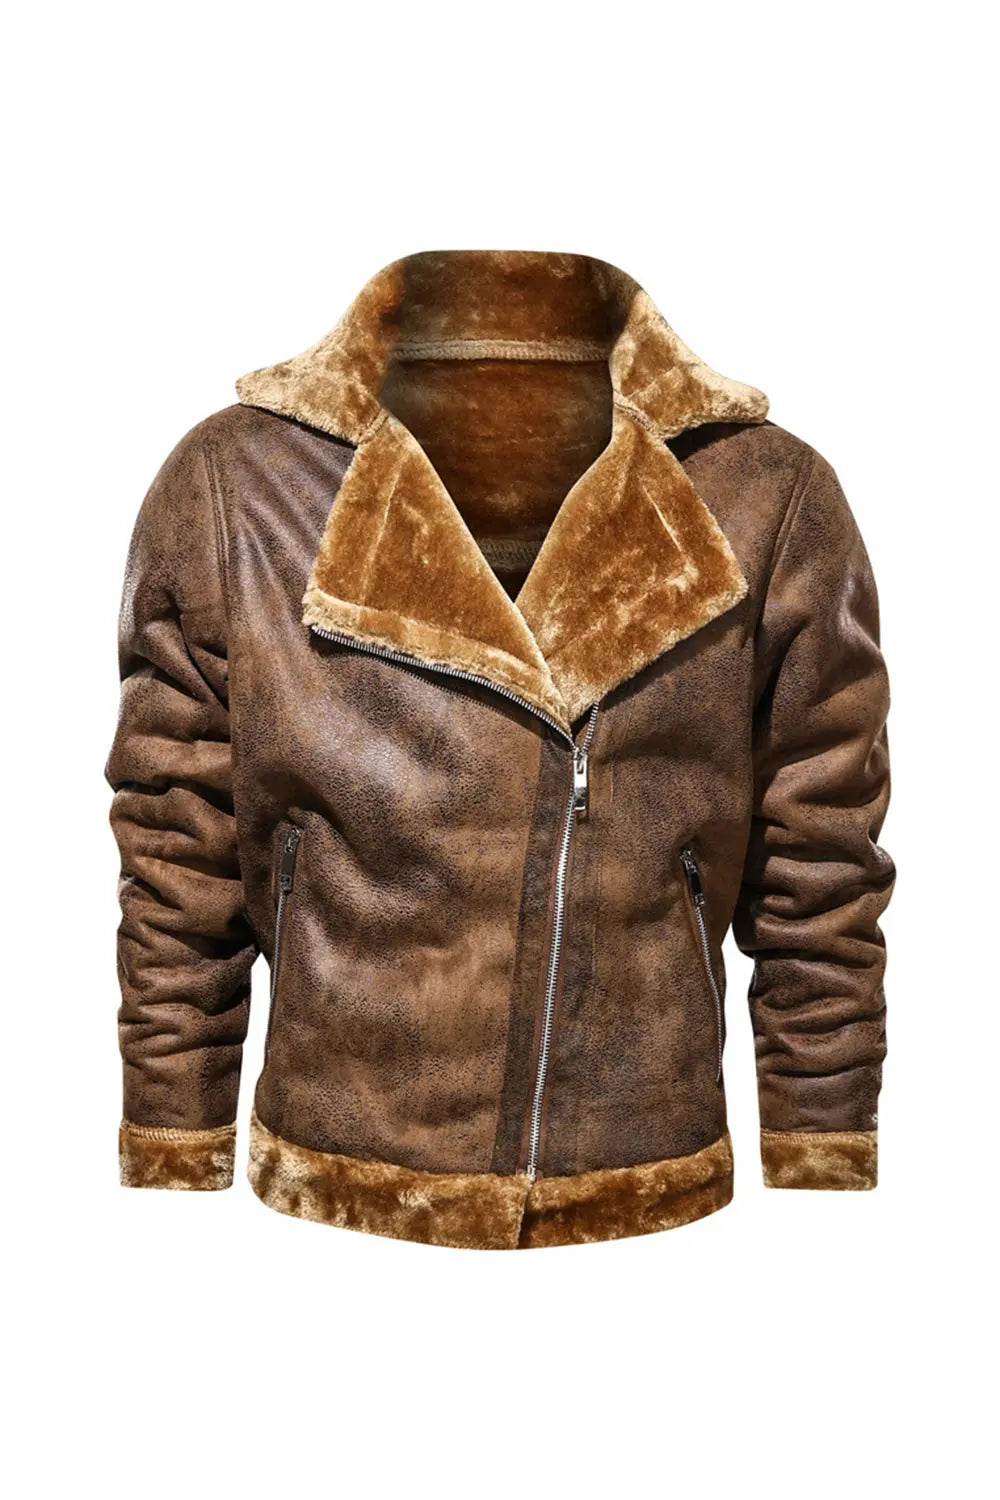 Leather Jacket With Velvet - Brown - Strange Clothes